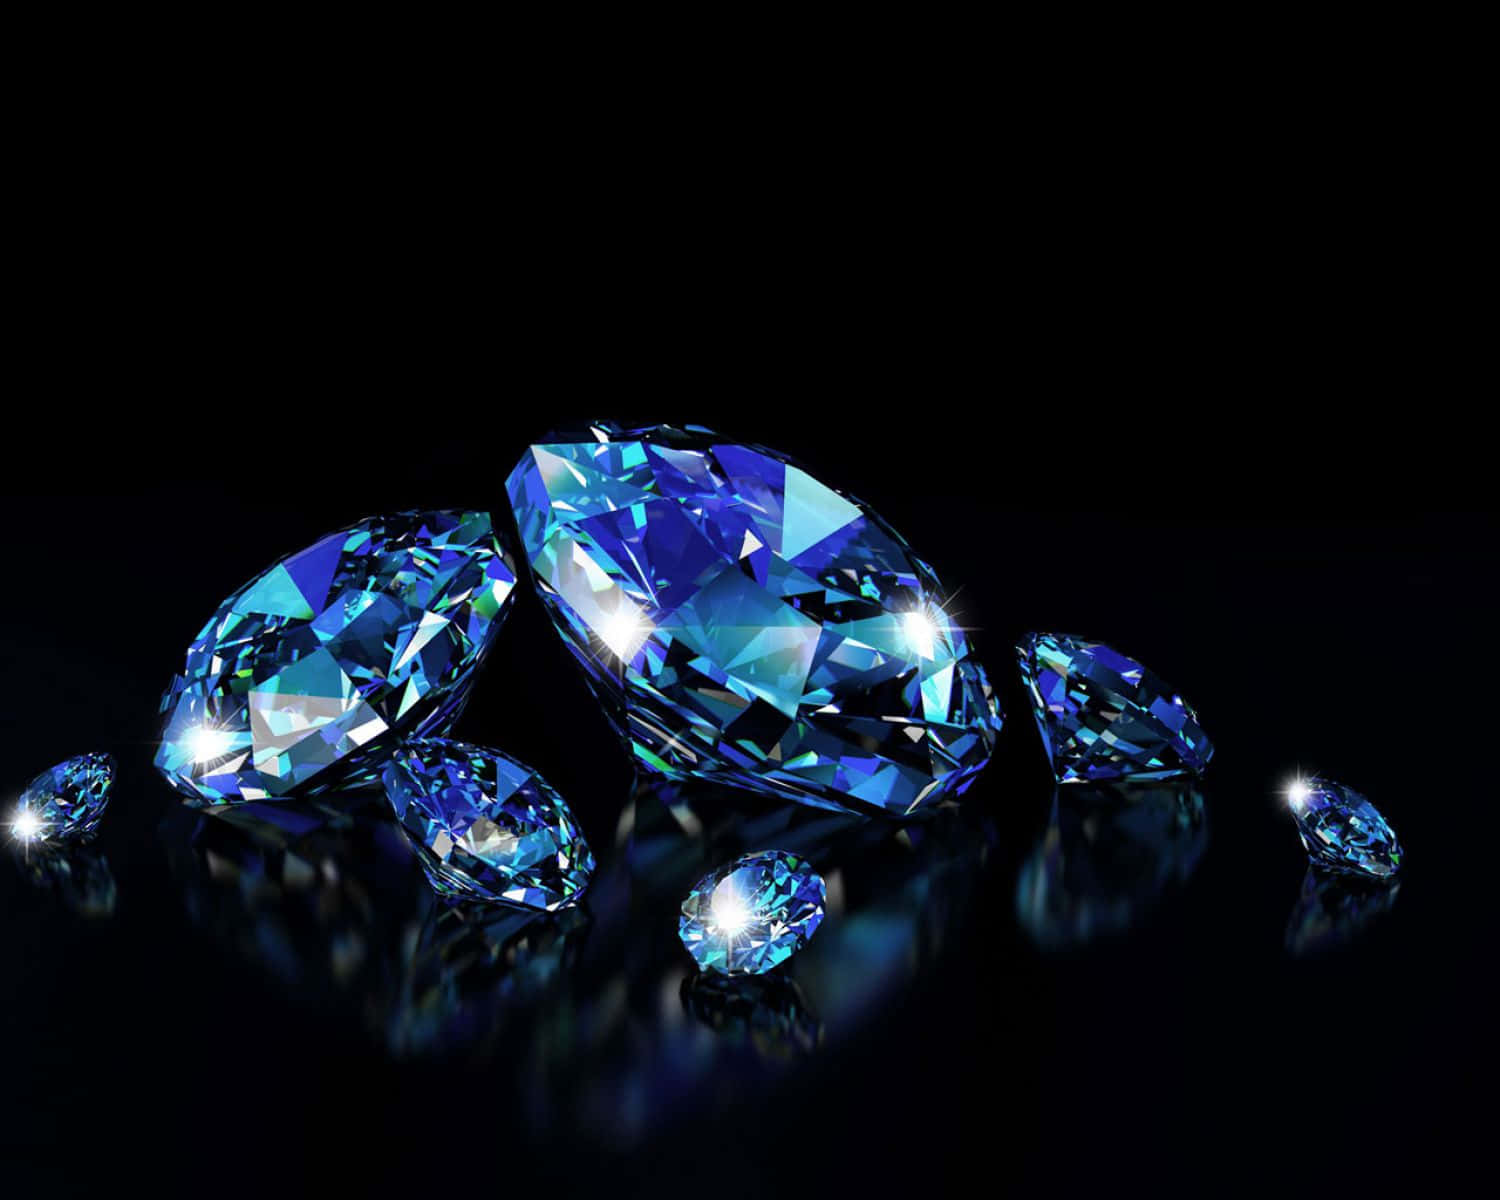 A dazzling diamond background